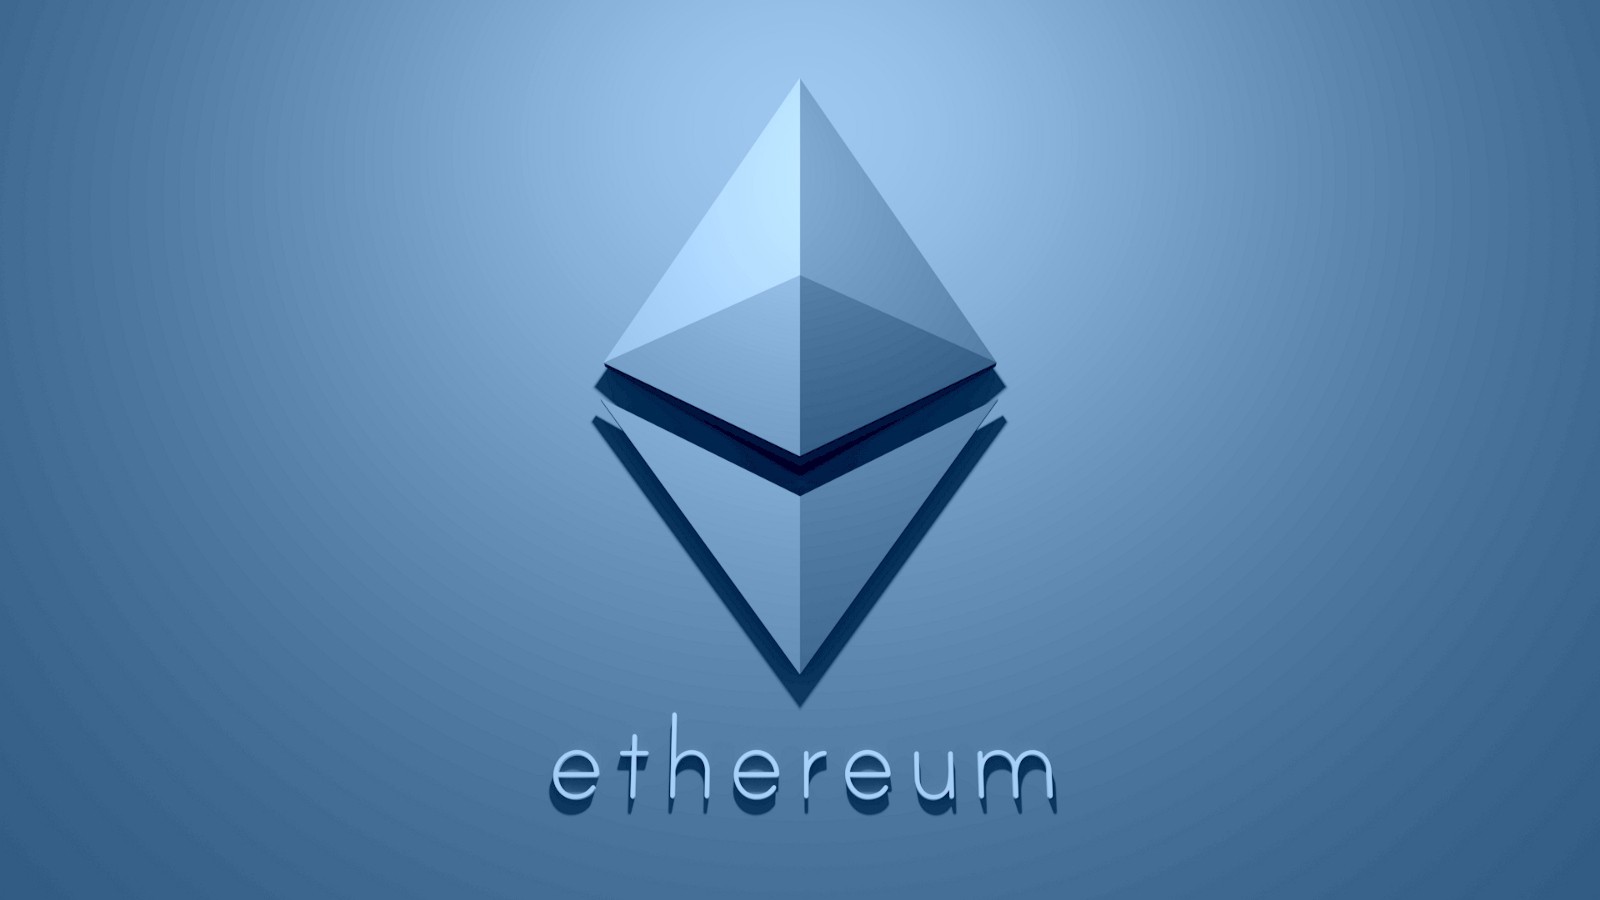 The logo of Ethereum (ETH)